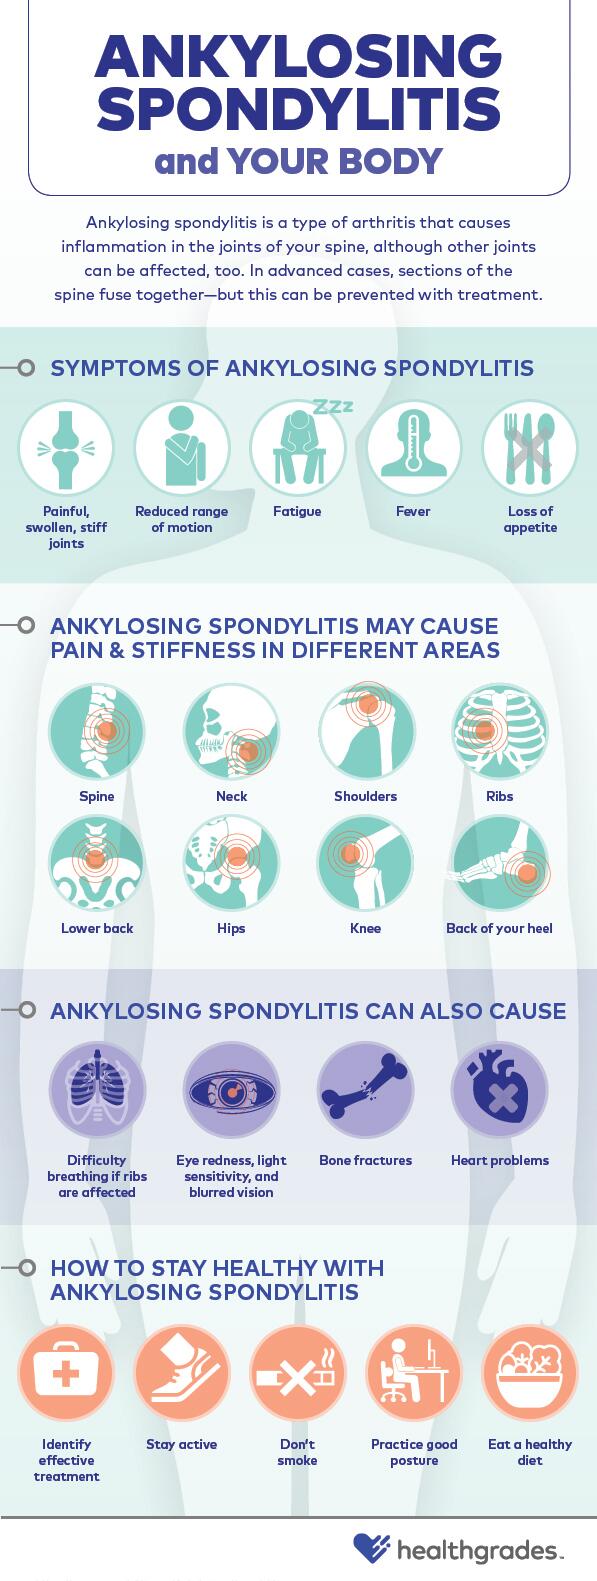 Ankylosing Sponylitis and Your Body